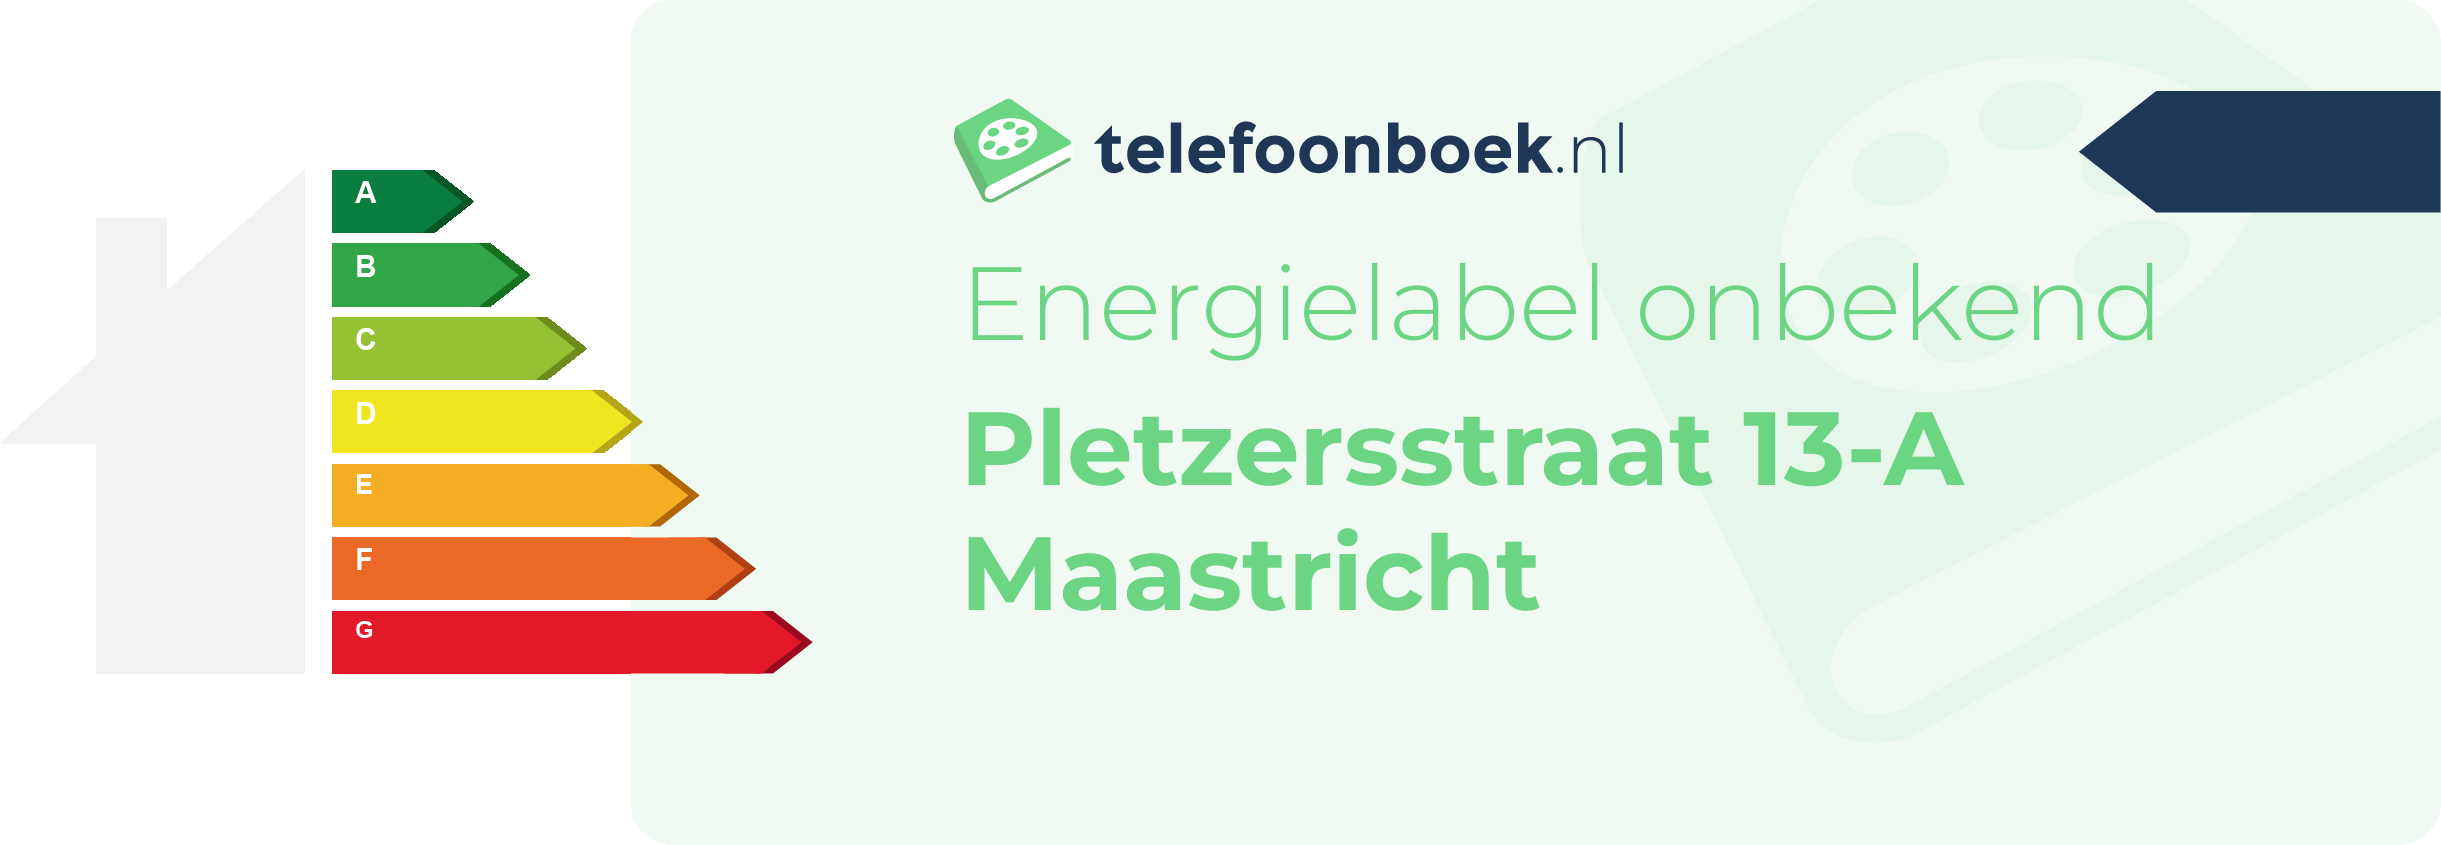 Energielabel Pletzersstraat 13-A Maastricht